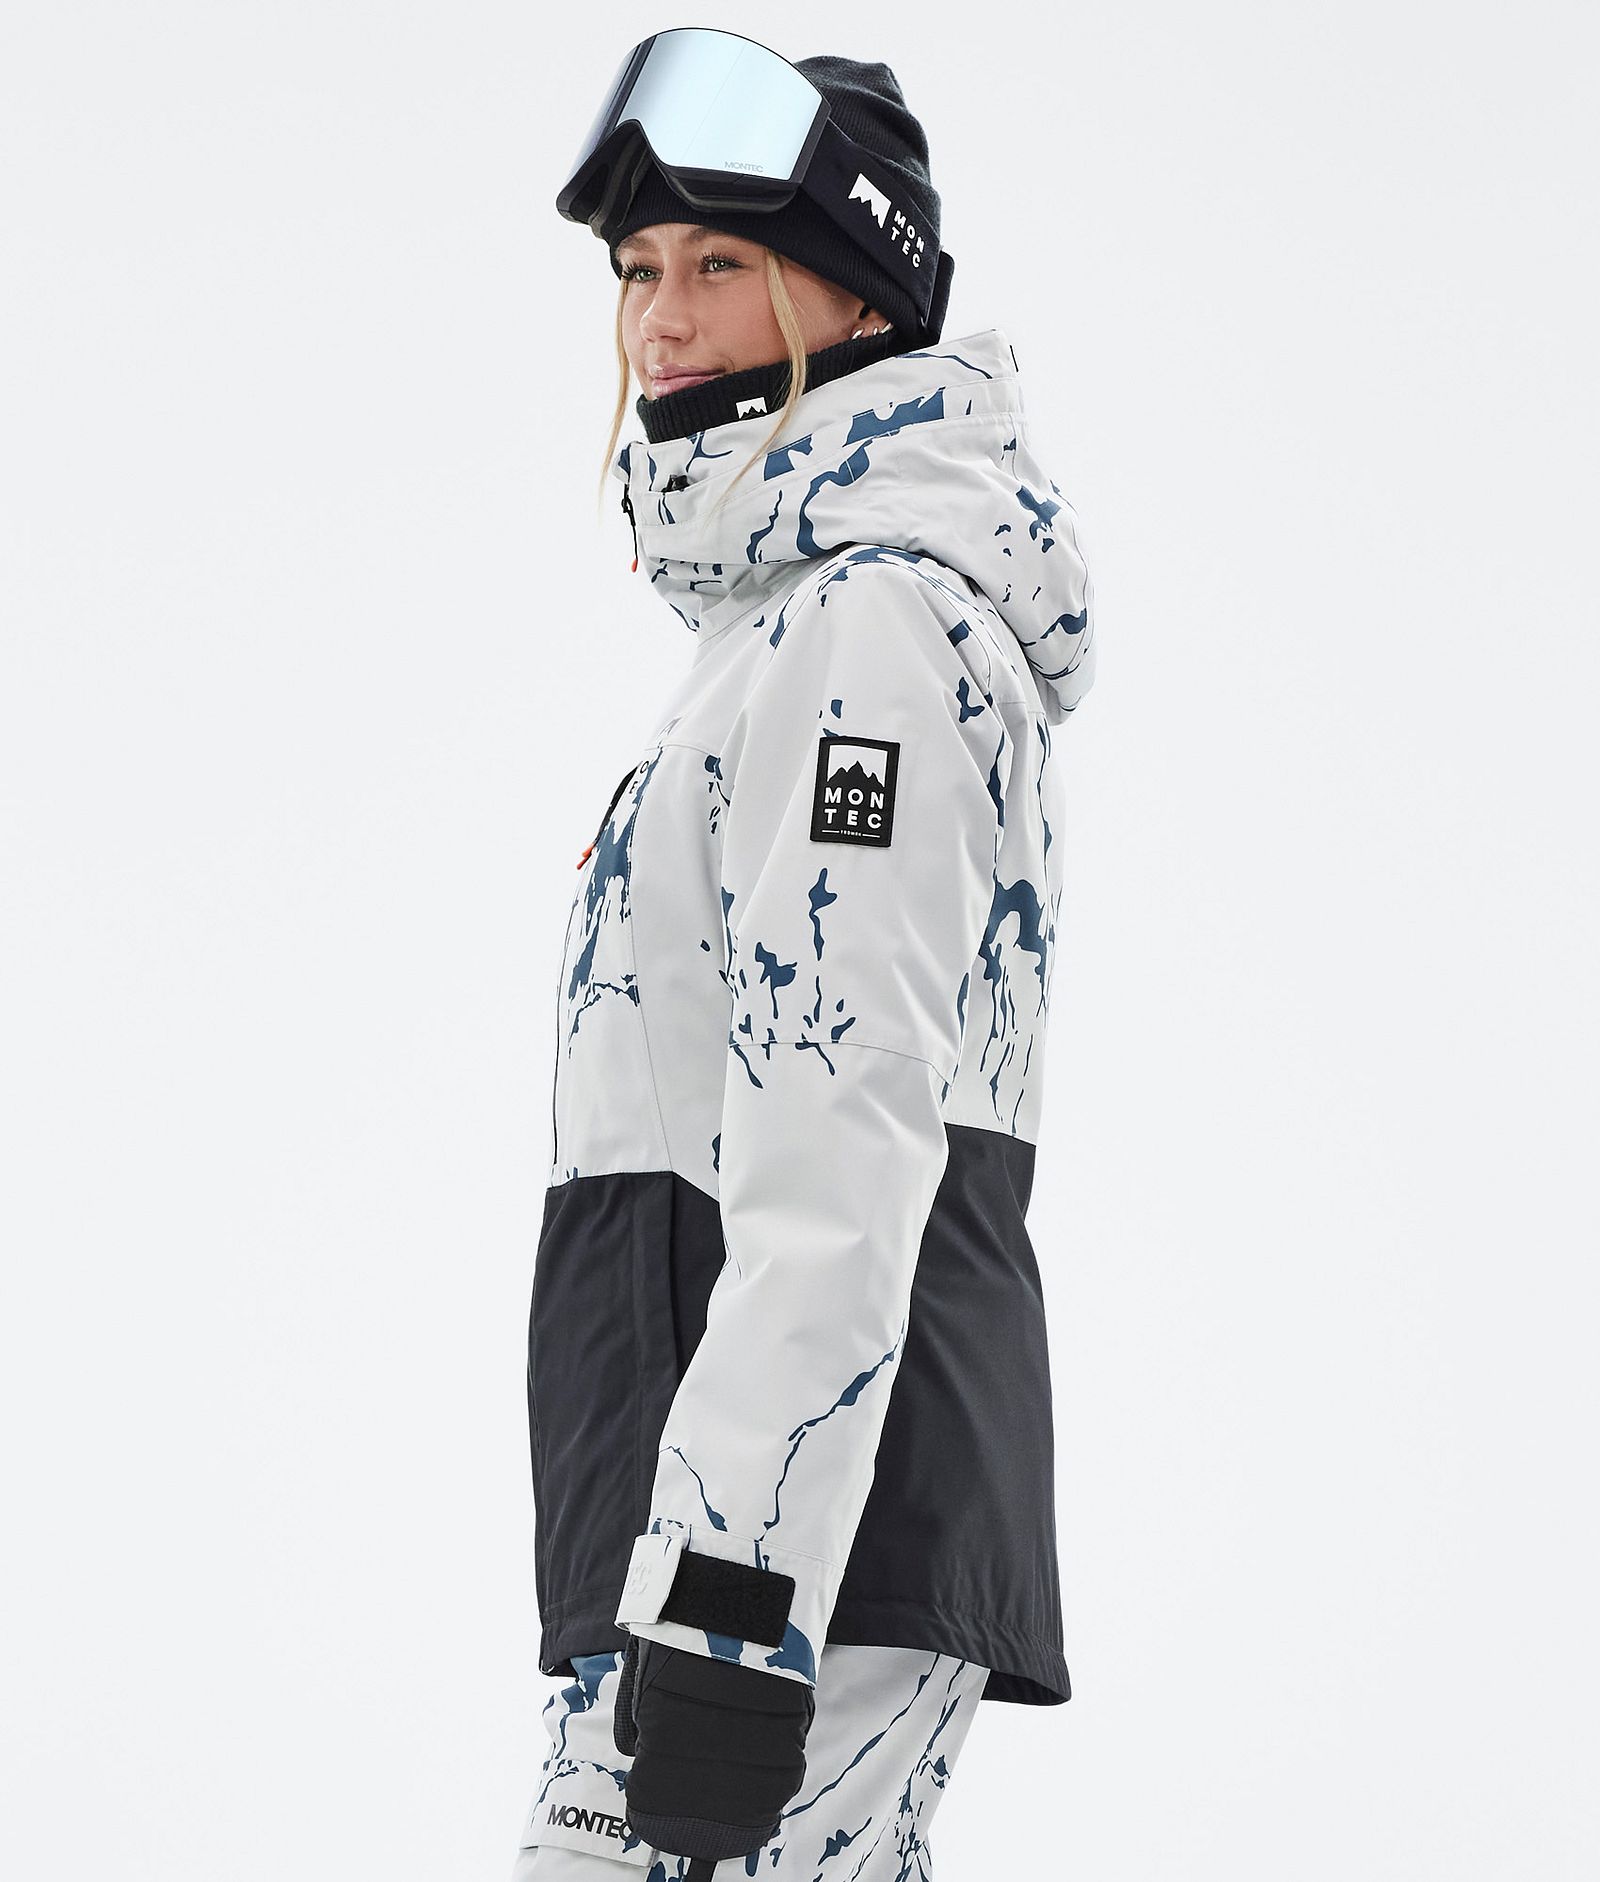 Moss W Veste de Ski Femme Ice/Black, Image 6 sur 10